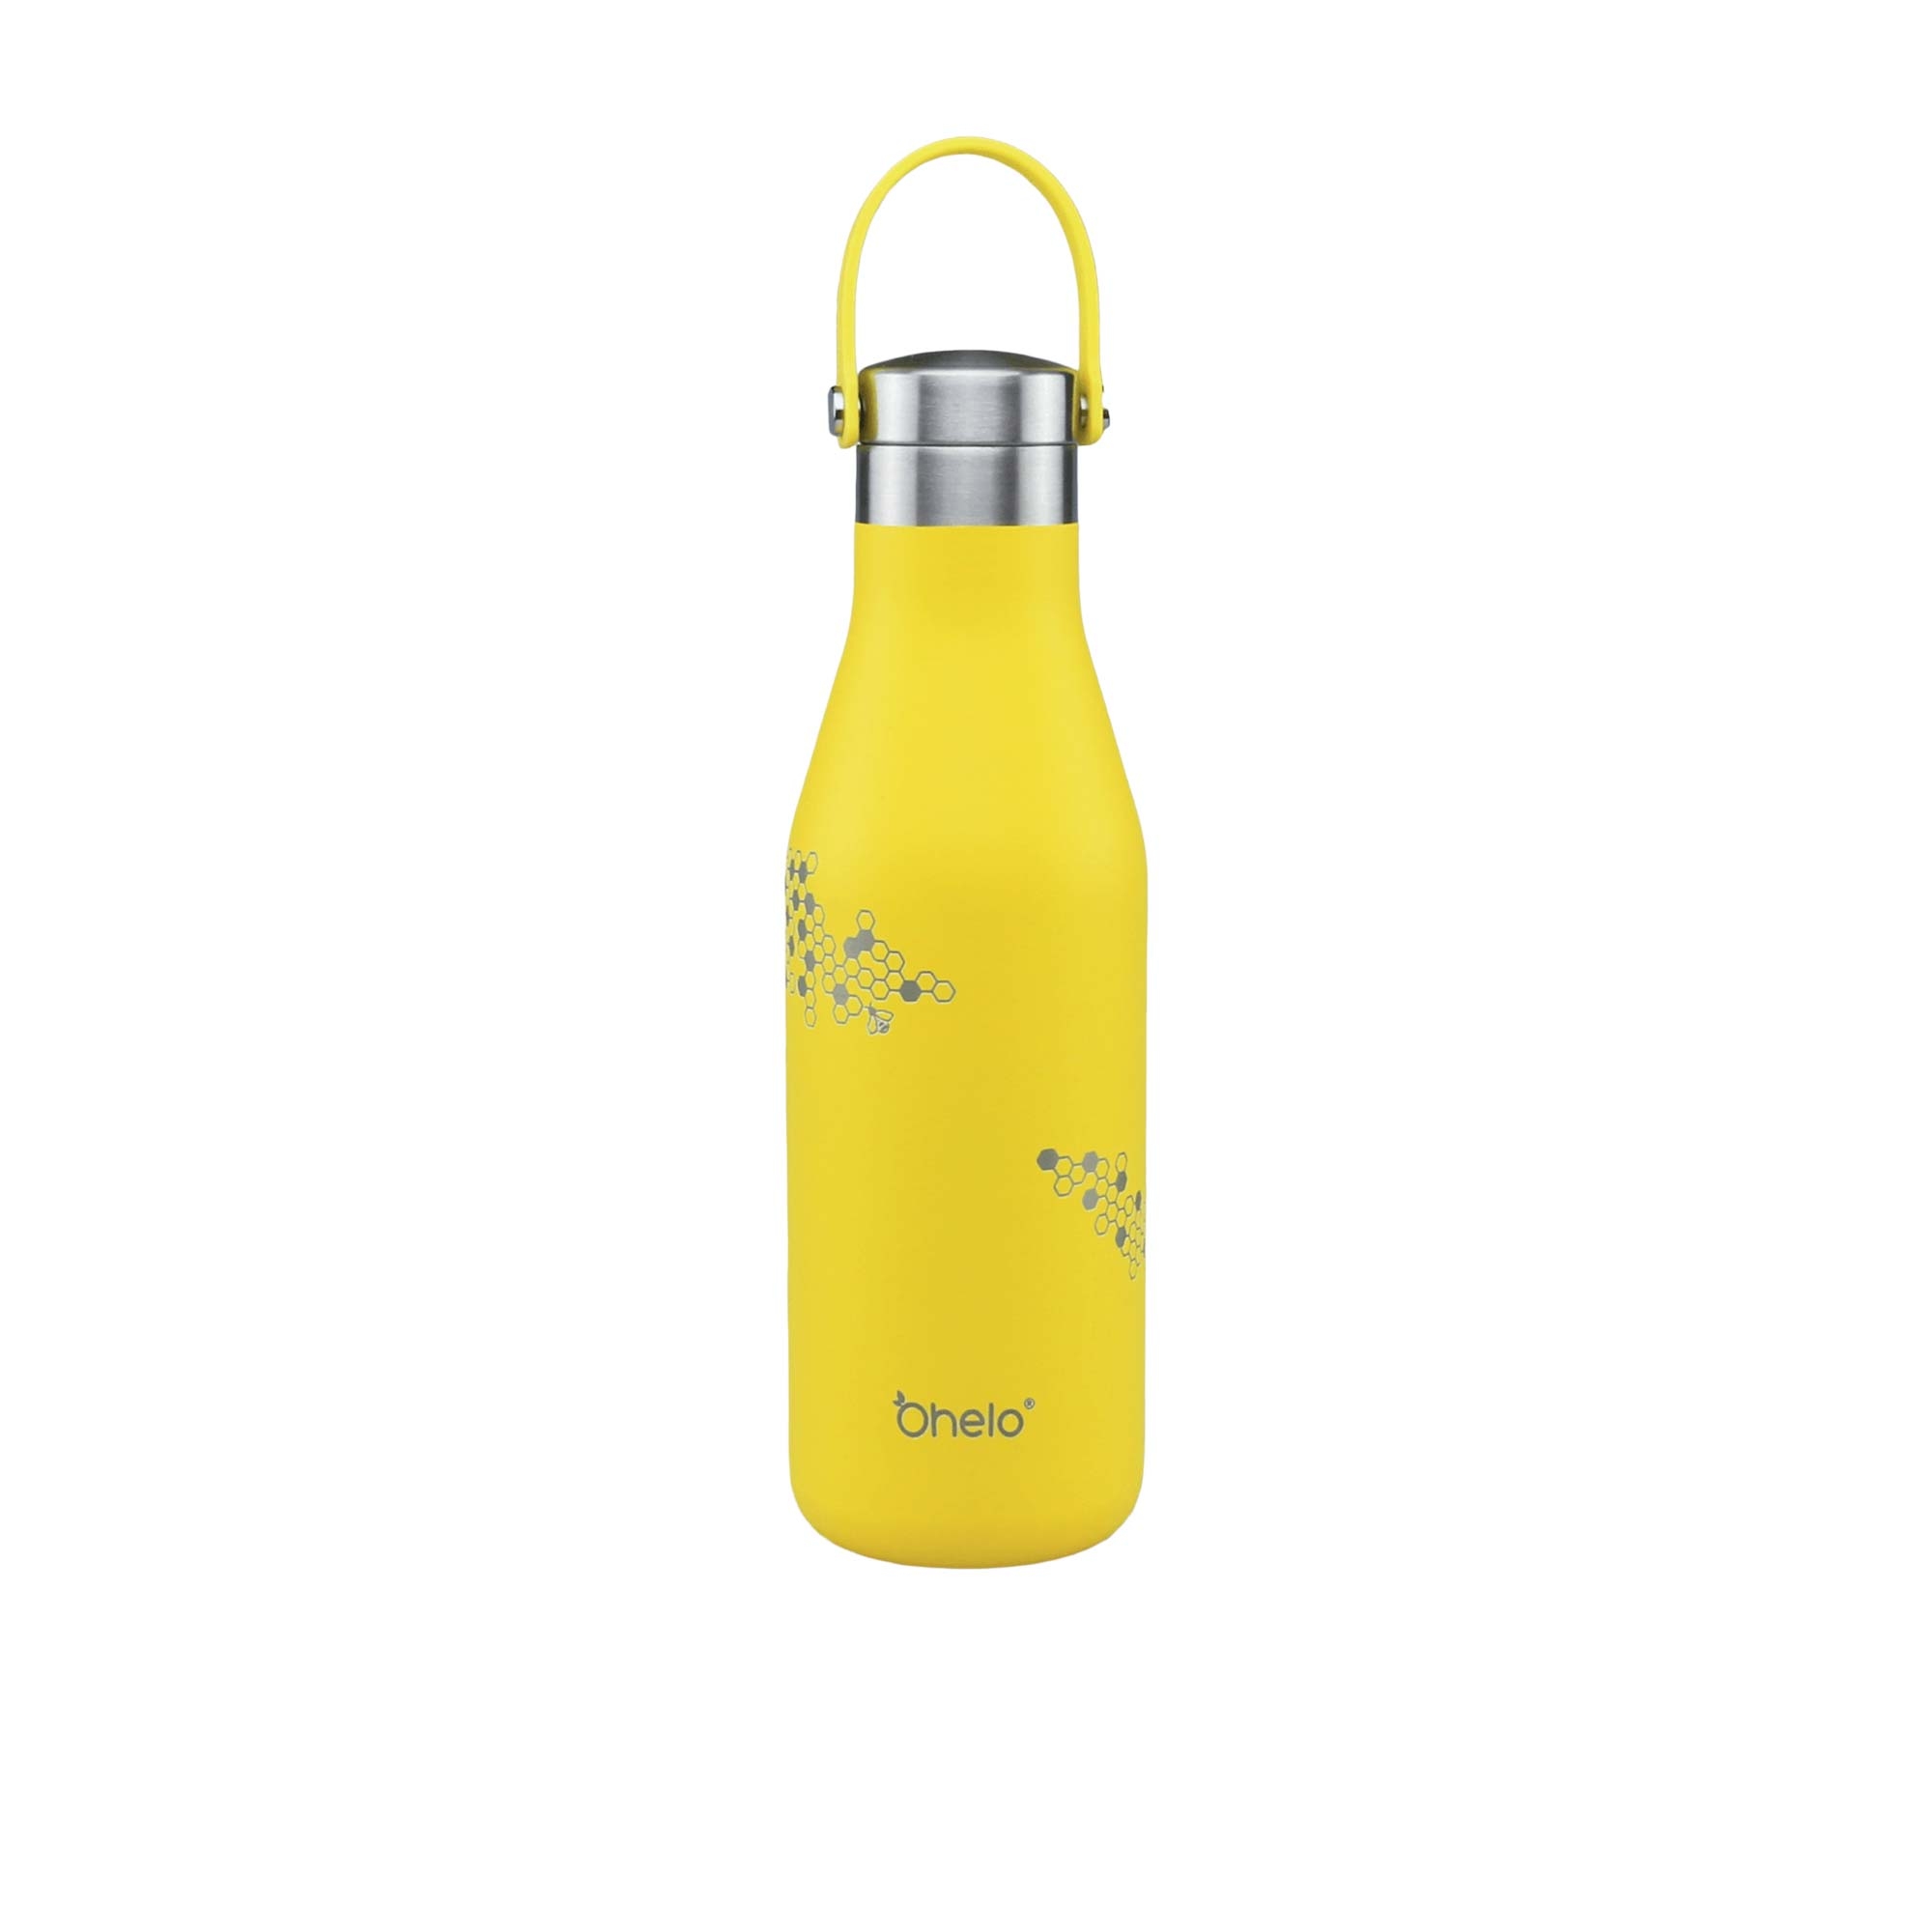 Ohelo Insulated Drink Bottle 500ml Yellow Image 1